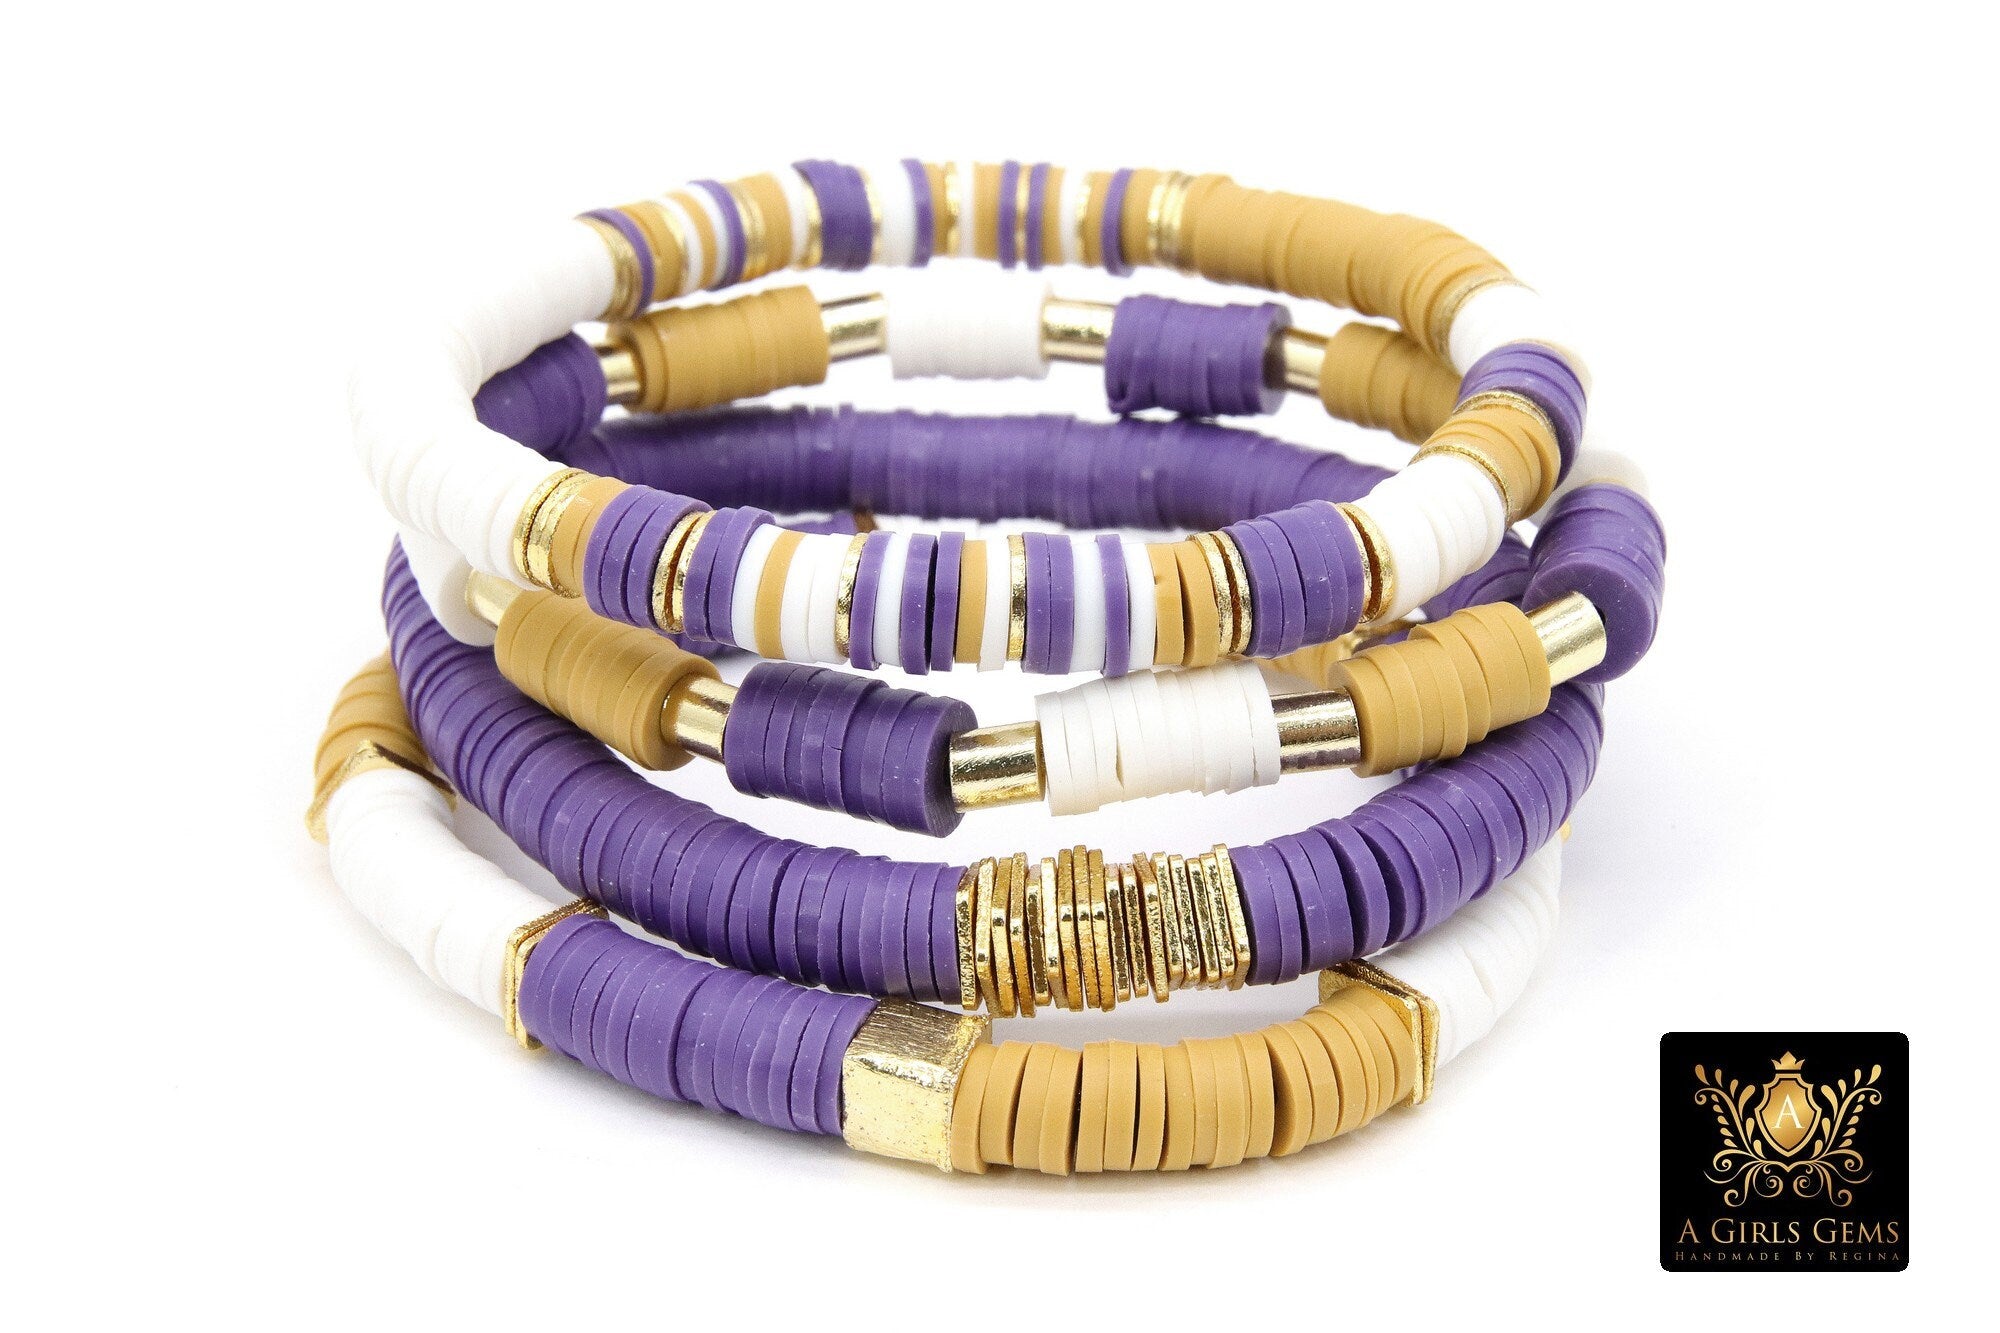 Heishi Beaded Bracelet, Purple and Gold Stretchy Bracelet #698, LSU Tiger Team Spirit Clay Beaded Bracelets #1 Yellow Bead/LSU